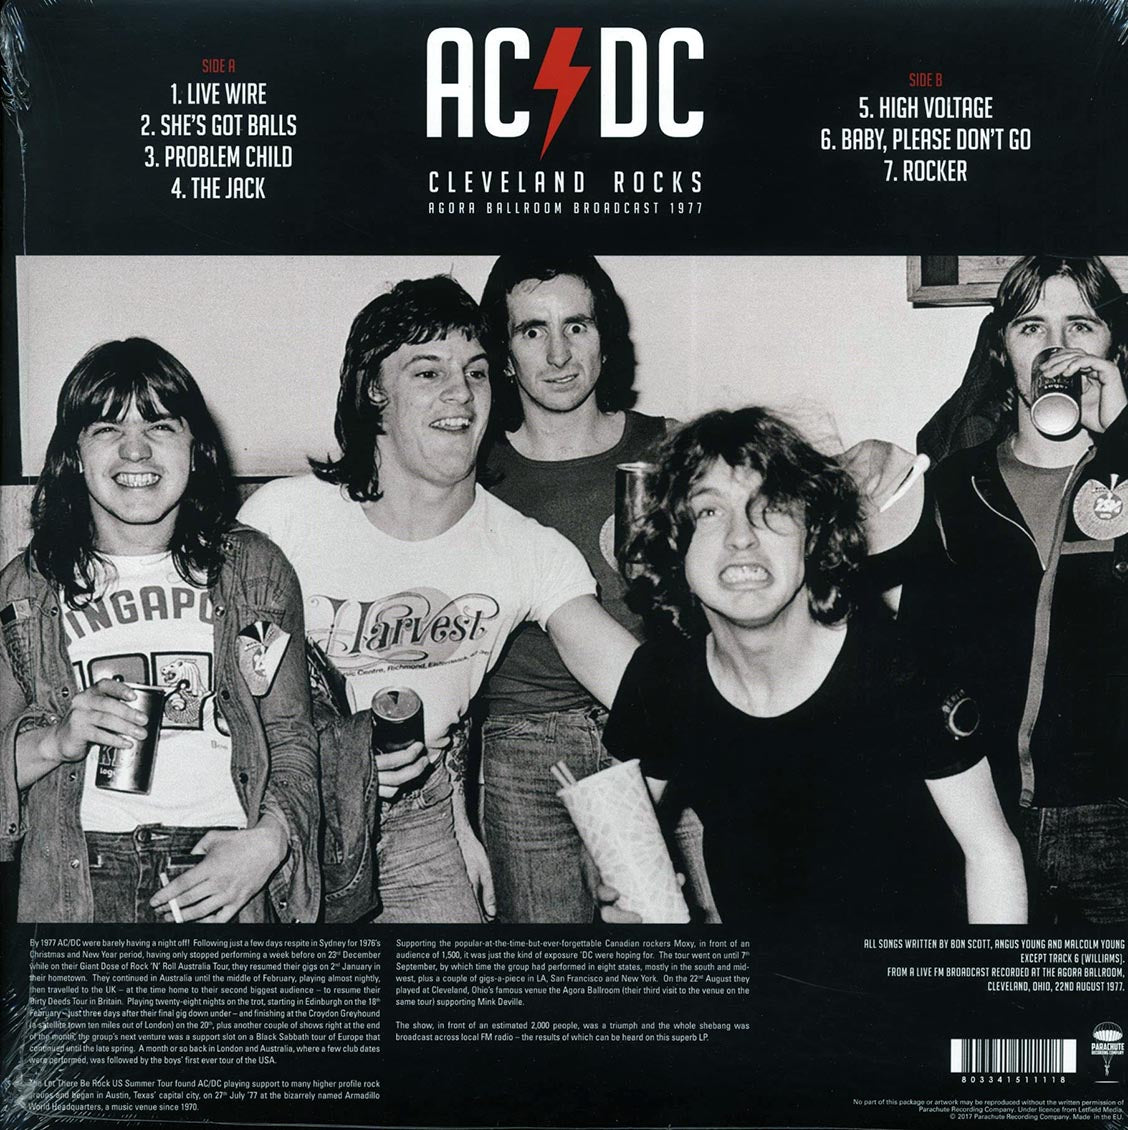 AC/DC - Cleveland Rocks: Agora Ballroom Broadcast 1977 Ltd. Ed. Deluxe Vinyl | Parachute, 1977 | Soundtraxx Item No. 283401